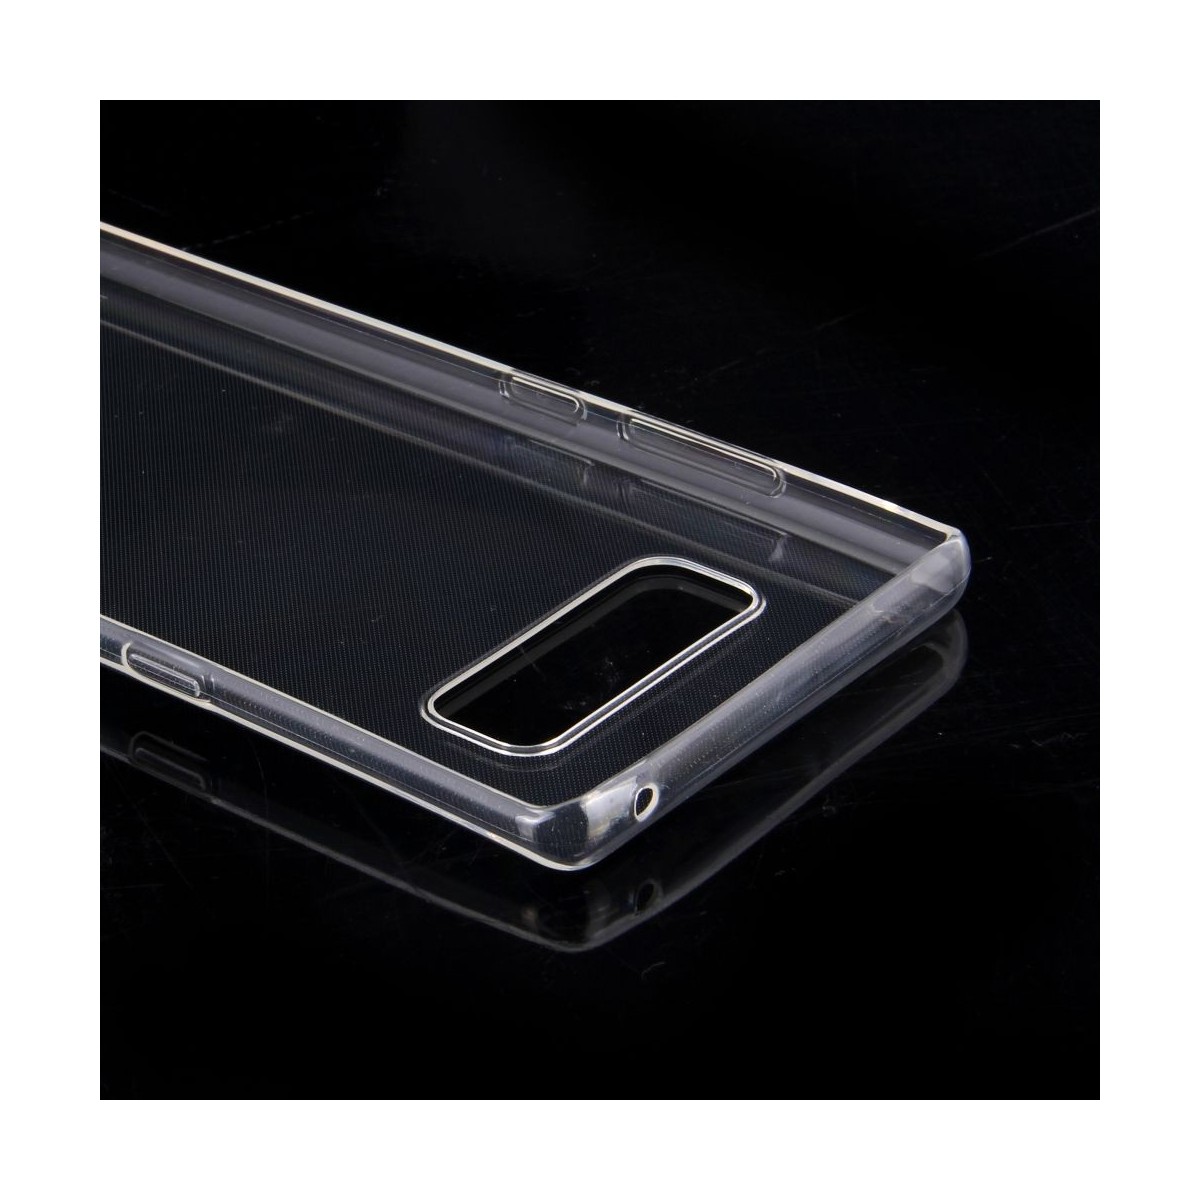 Coque Galaxy Note 8 plastique souple Transparente - G-case